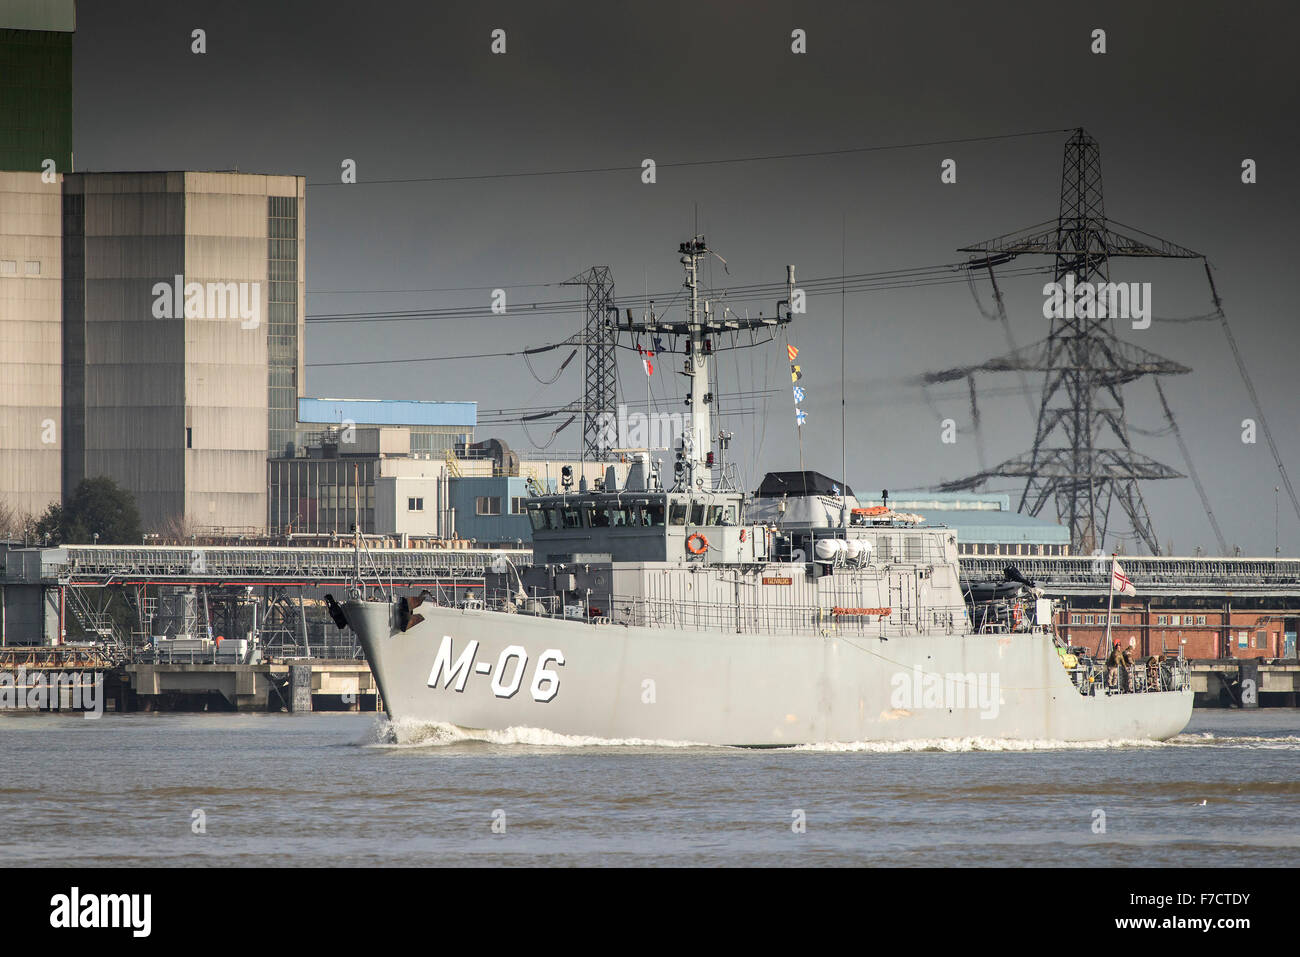 The NATO minehunter LVNS Talivaldis (M-06) steams upriver on the River Thames. Stock Photo